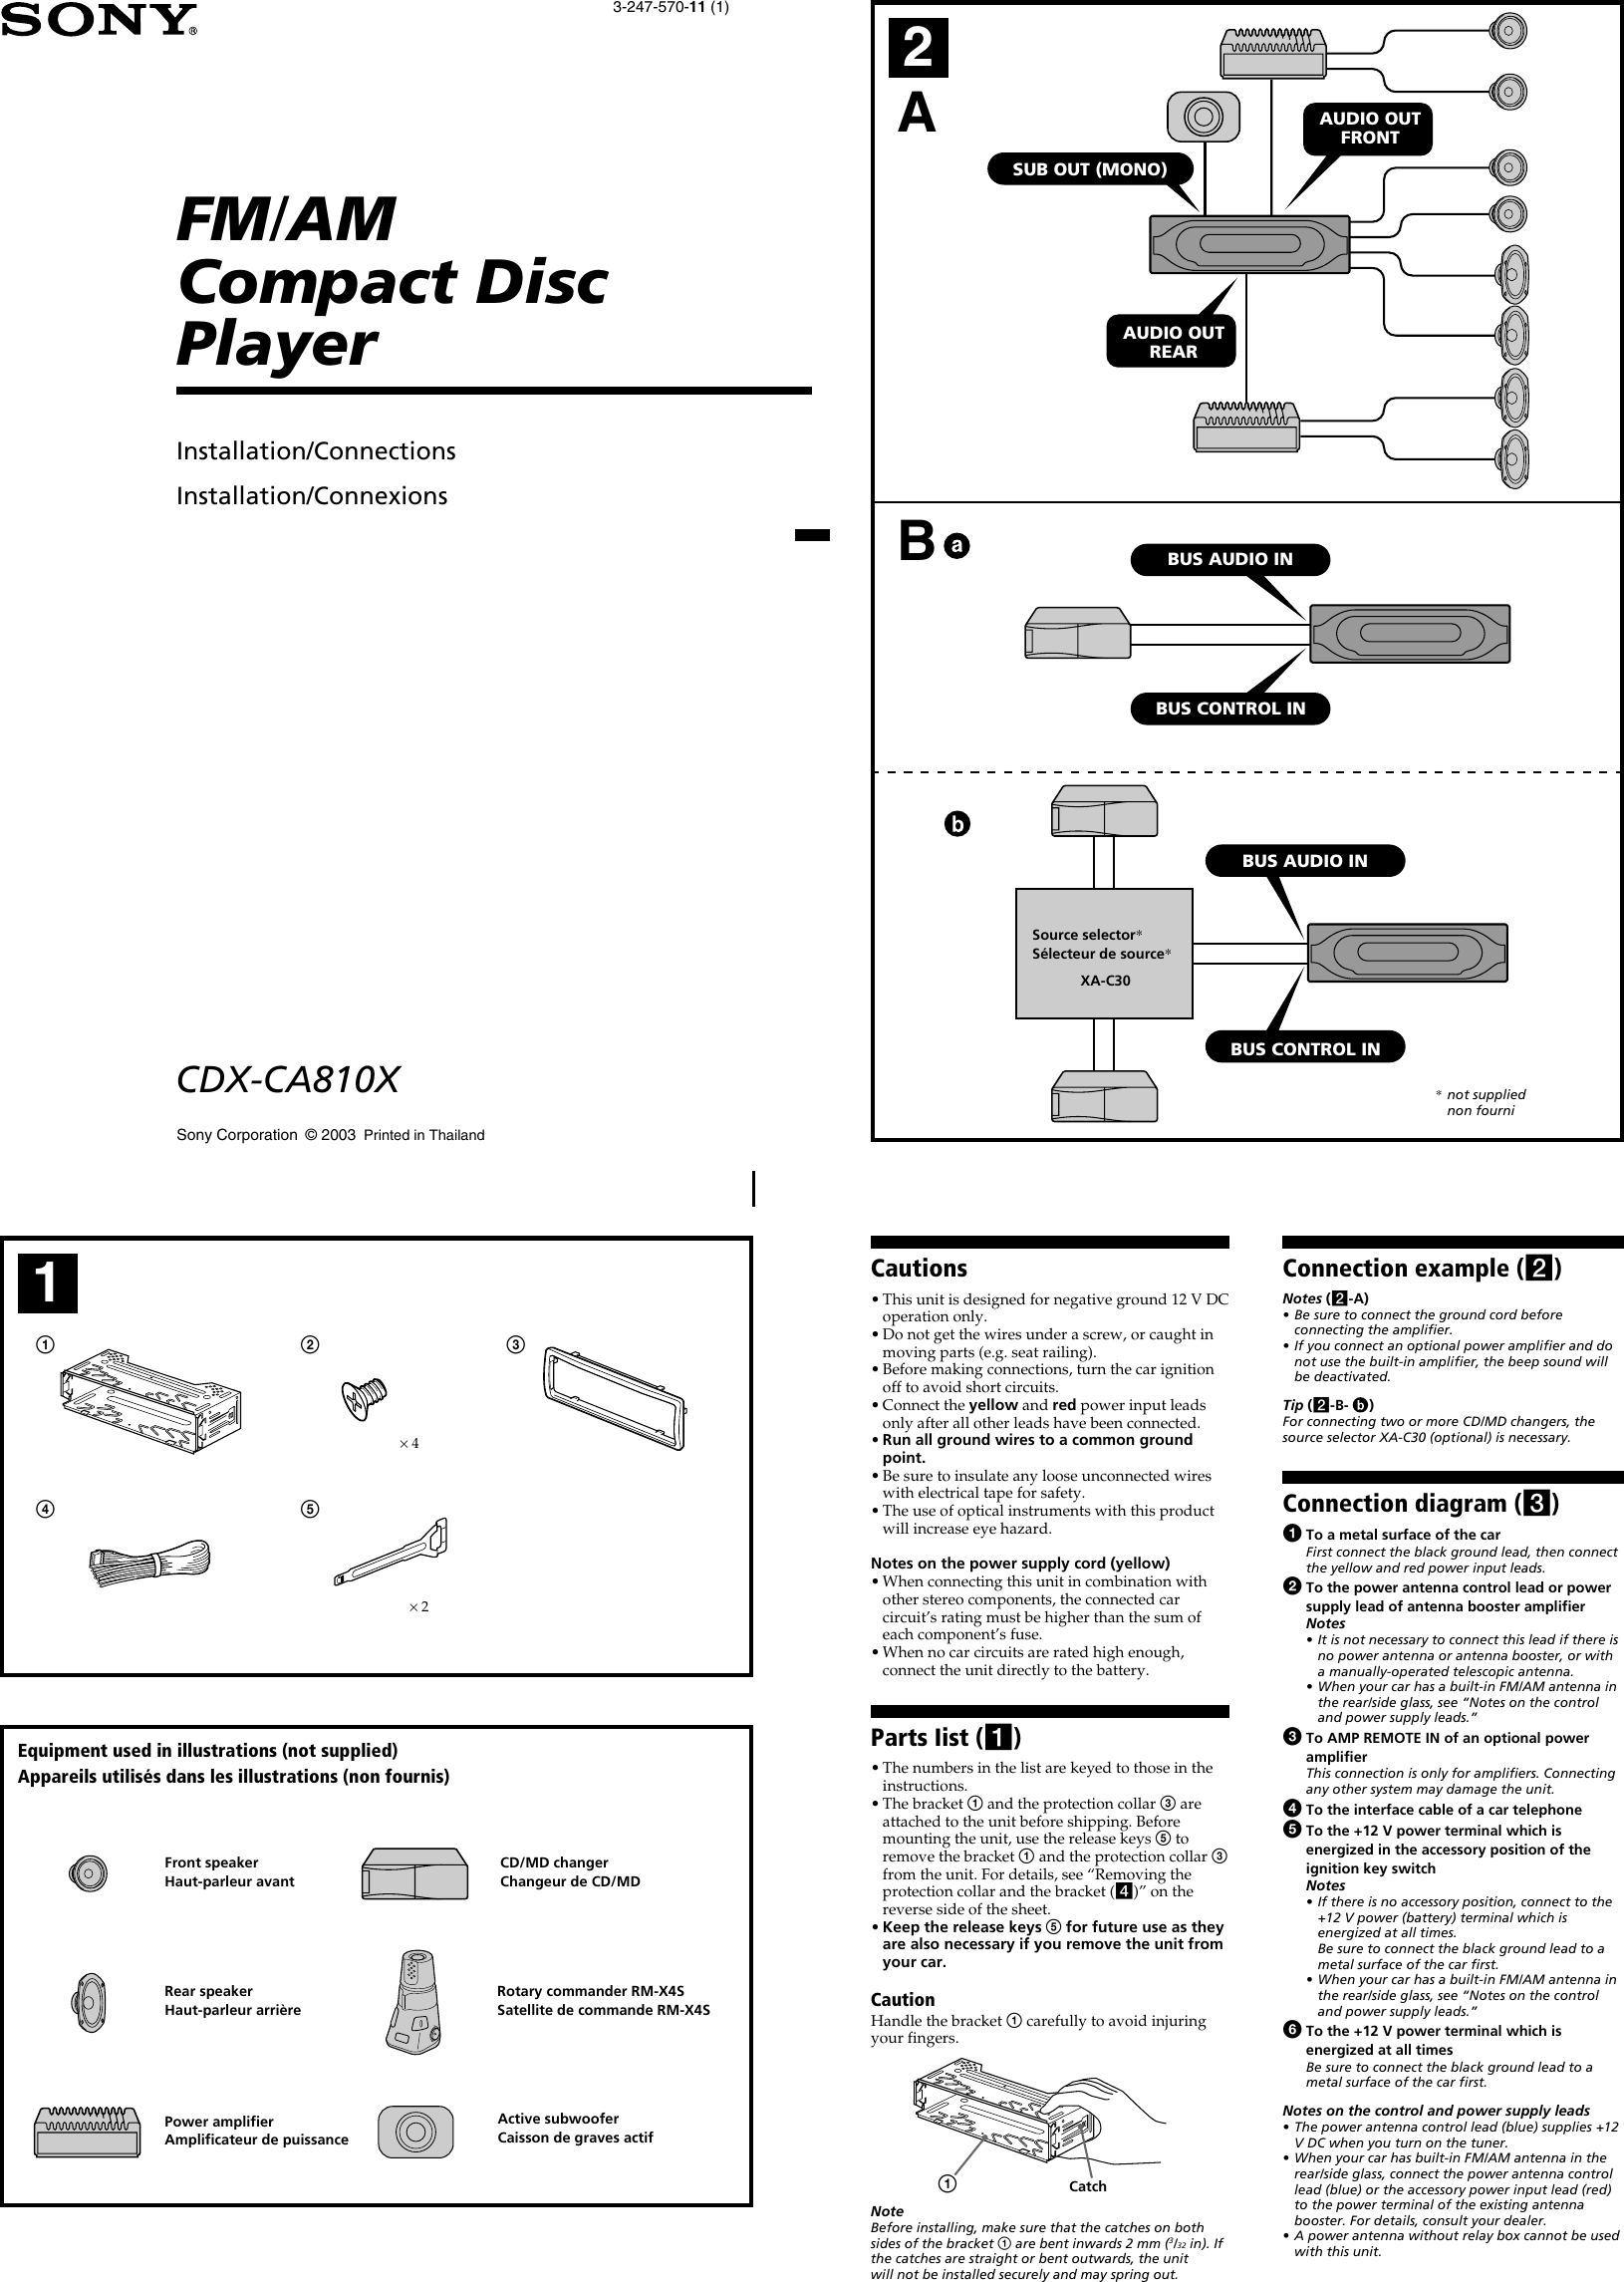 Page 1 of 4 - Sony Sony-Cdx-Ca810X-Installation-Instructions- US+1U.p65  Sony-cdx-ca810x-installation-instructions